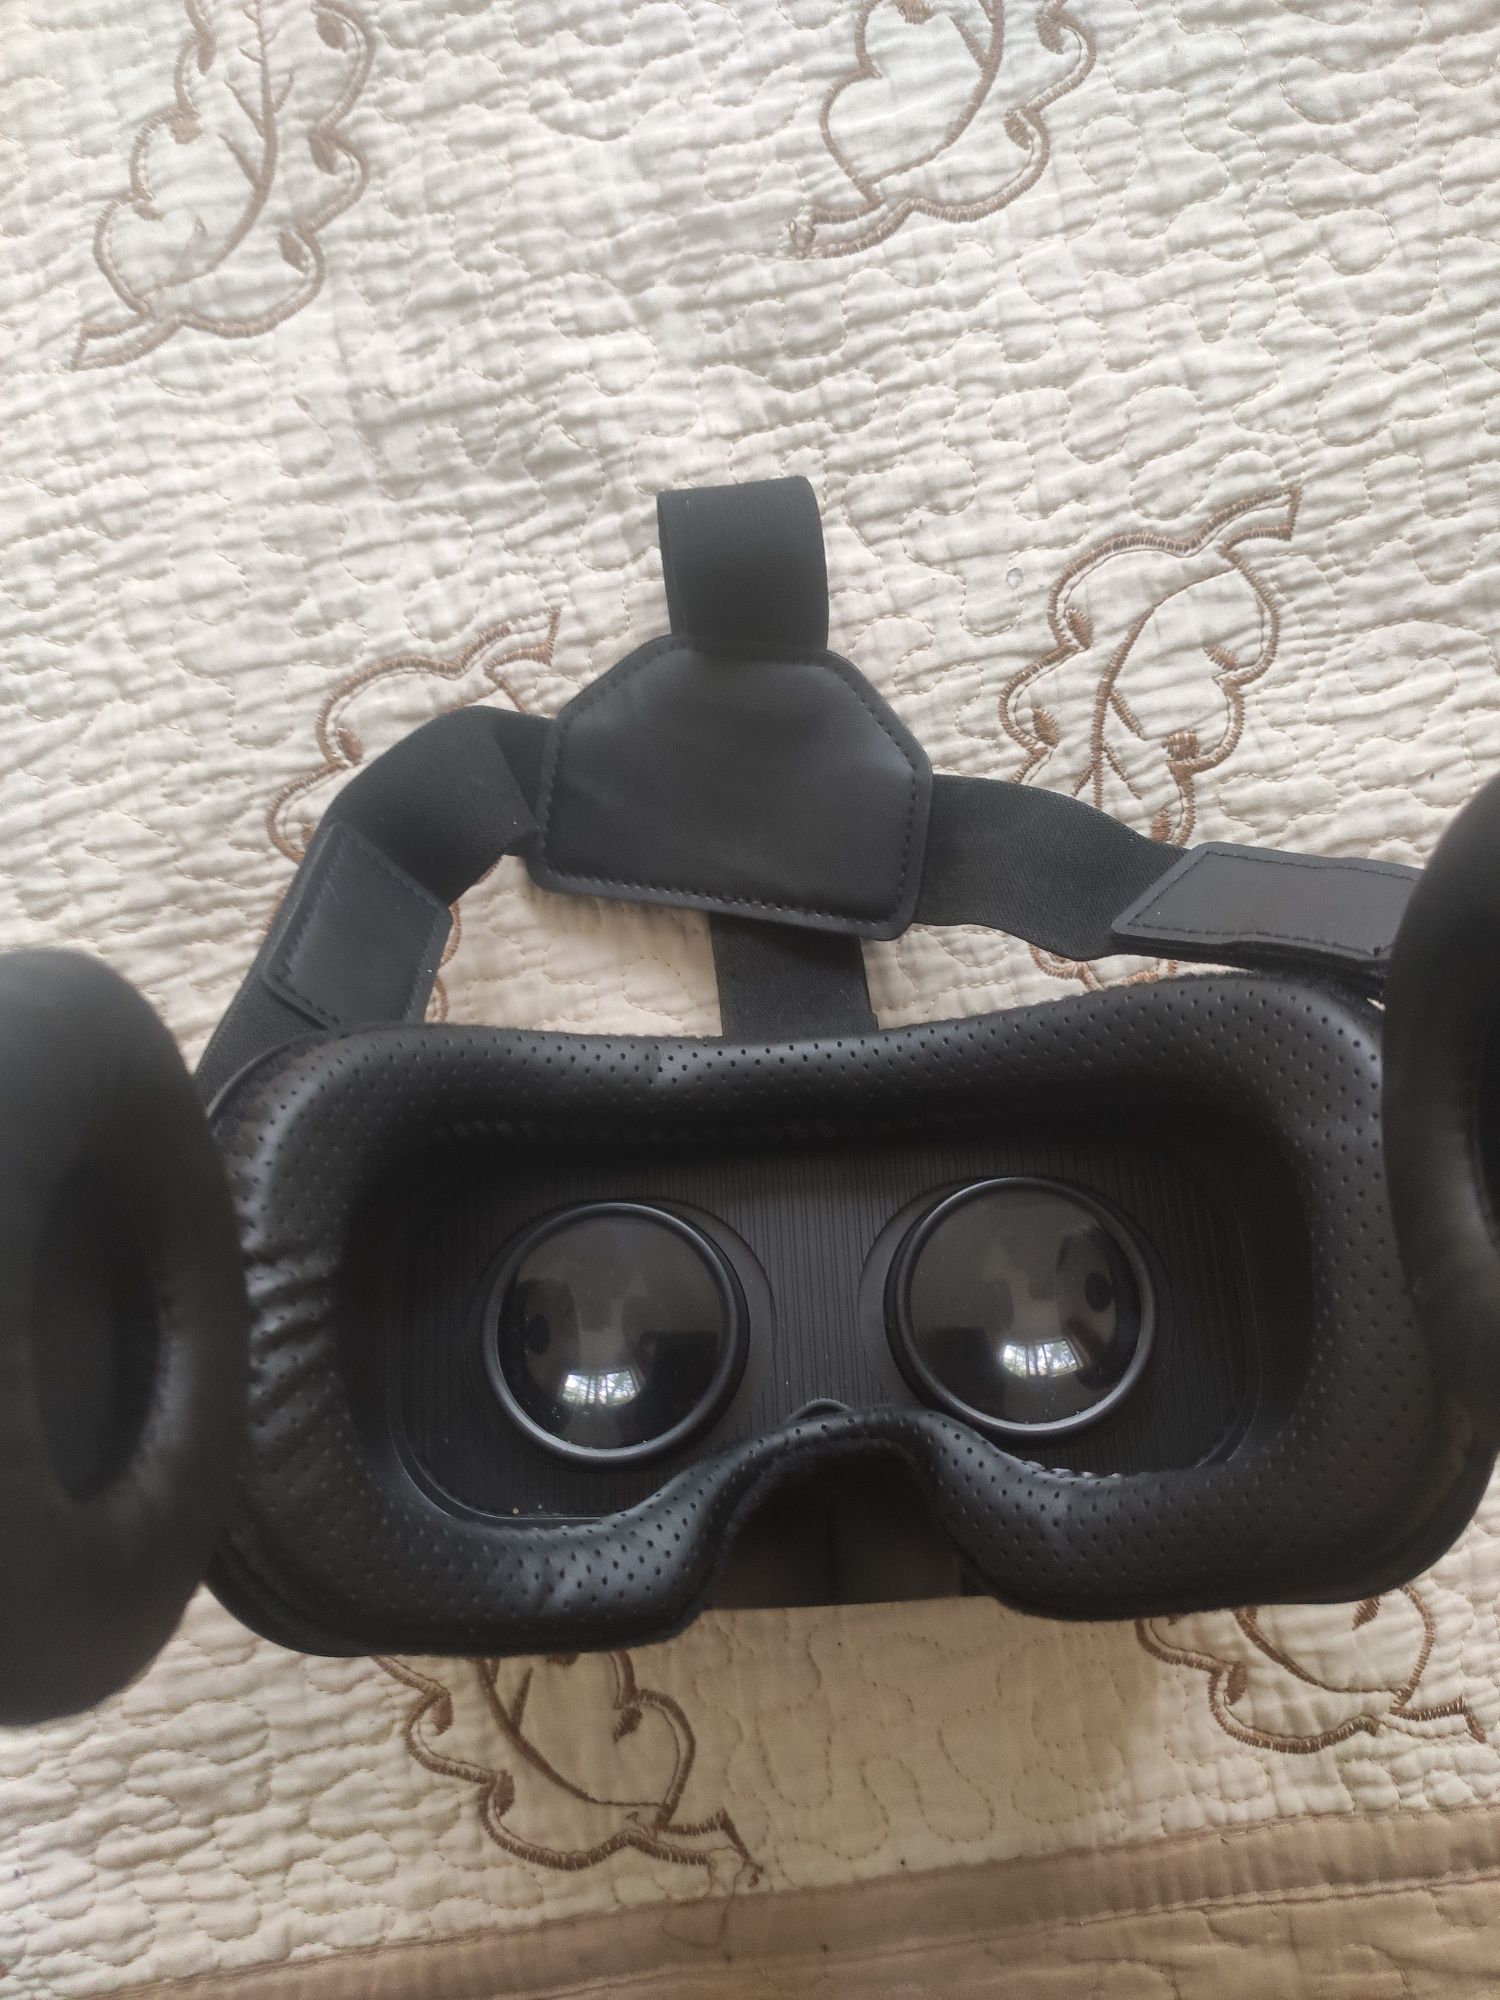 VR очки под телефон